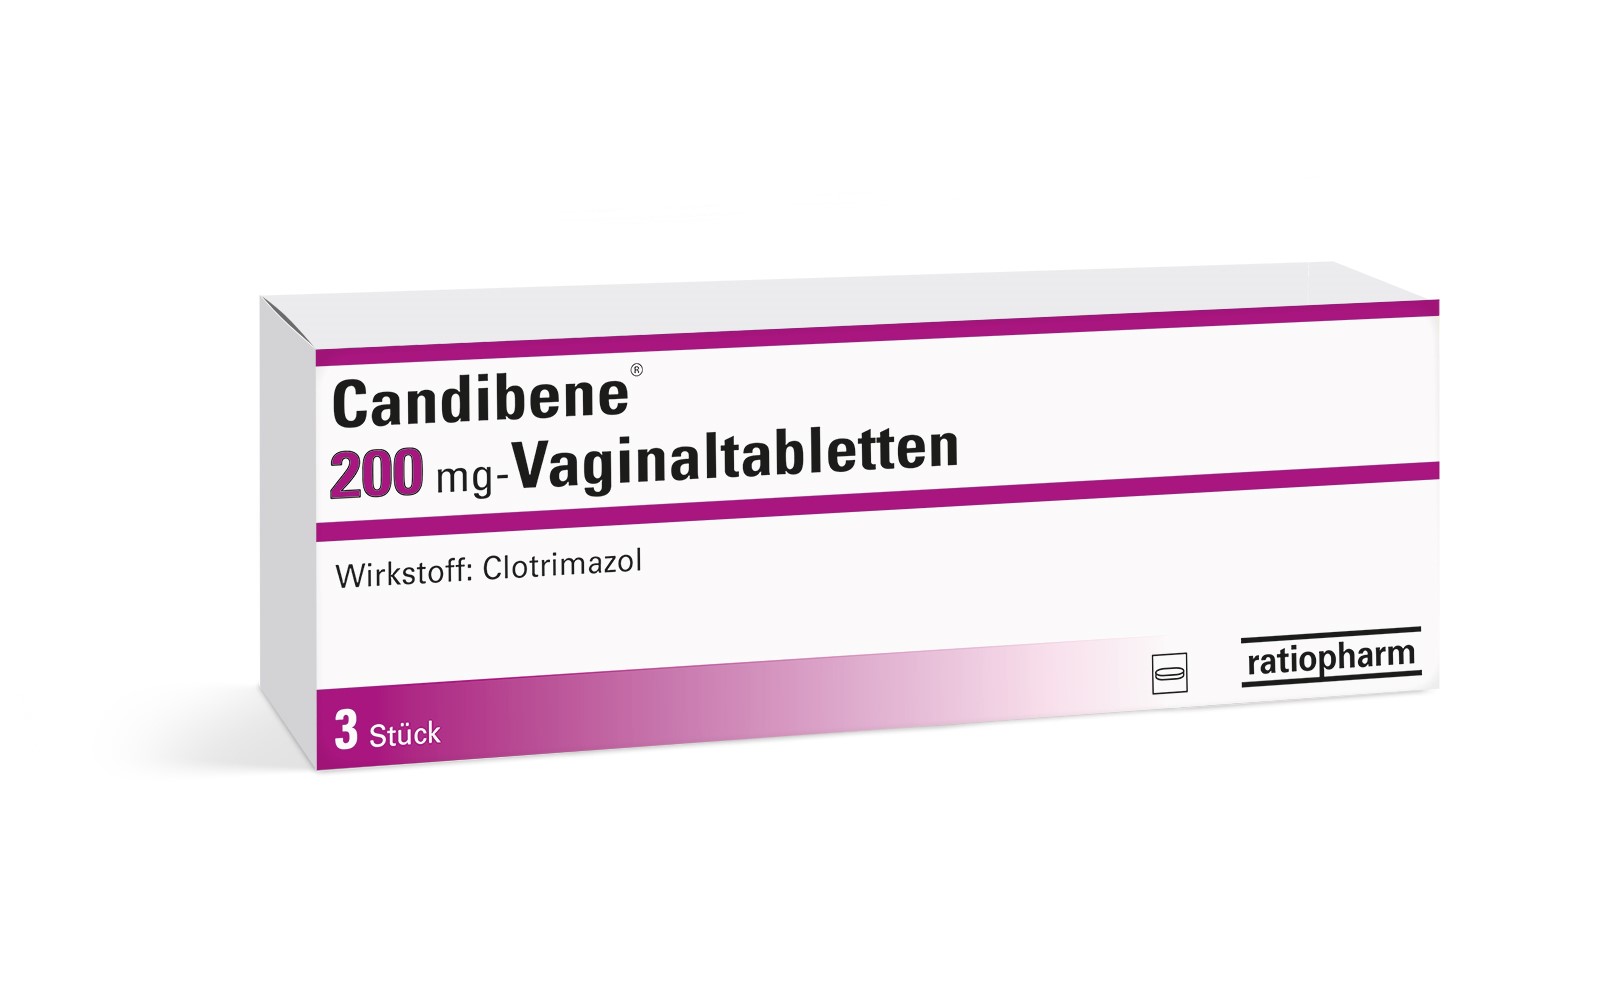 Candibene 200 mg - Vaginaltabletten